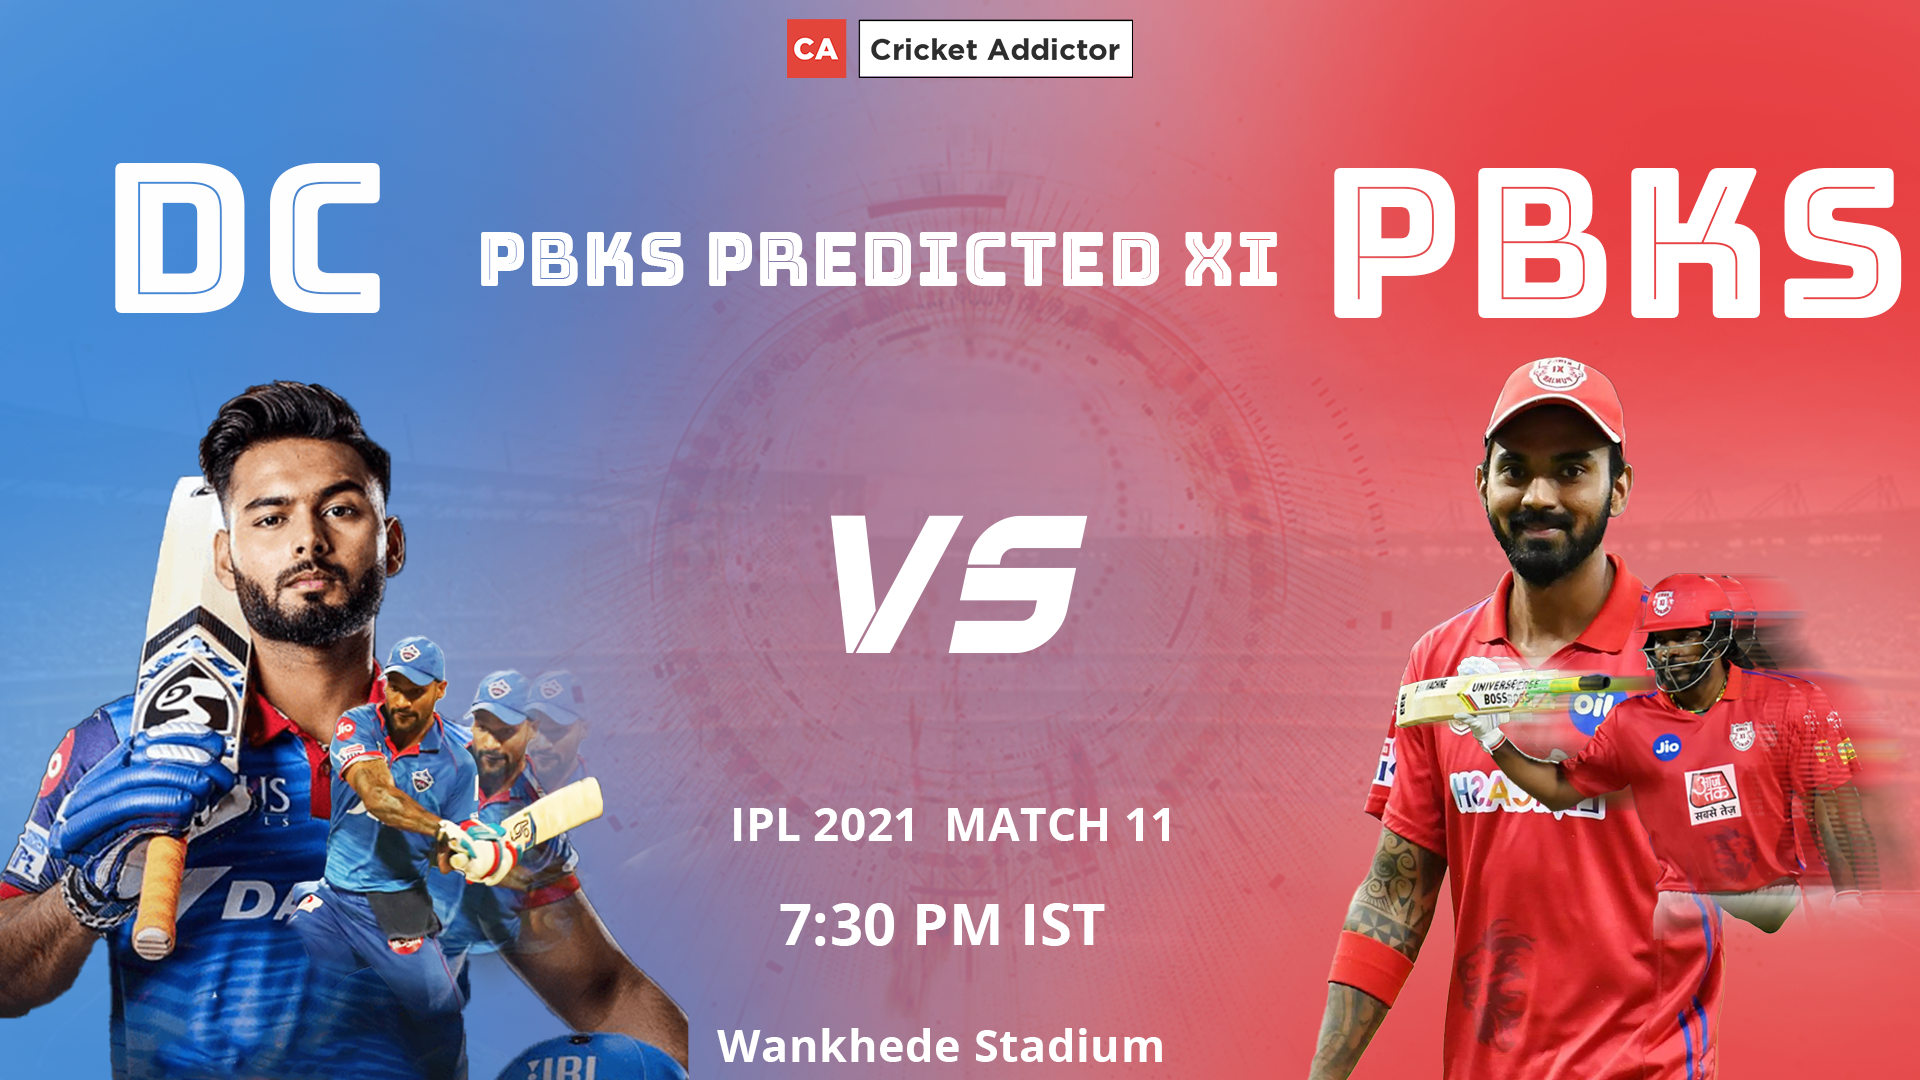 IPL 2021, Punjab Kings, PBKS, predicted playing XI, playing XI, DC vs PBKS